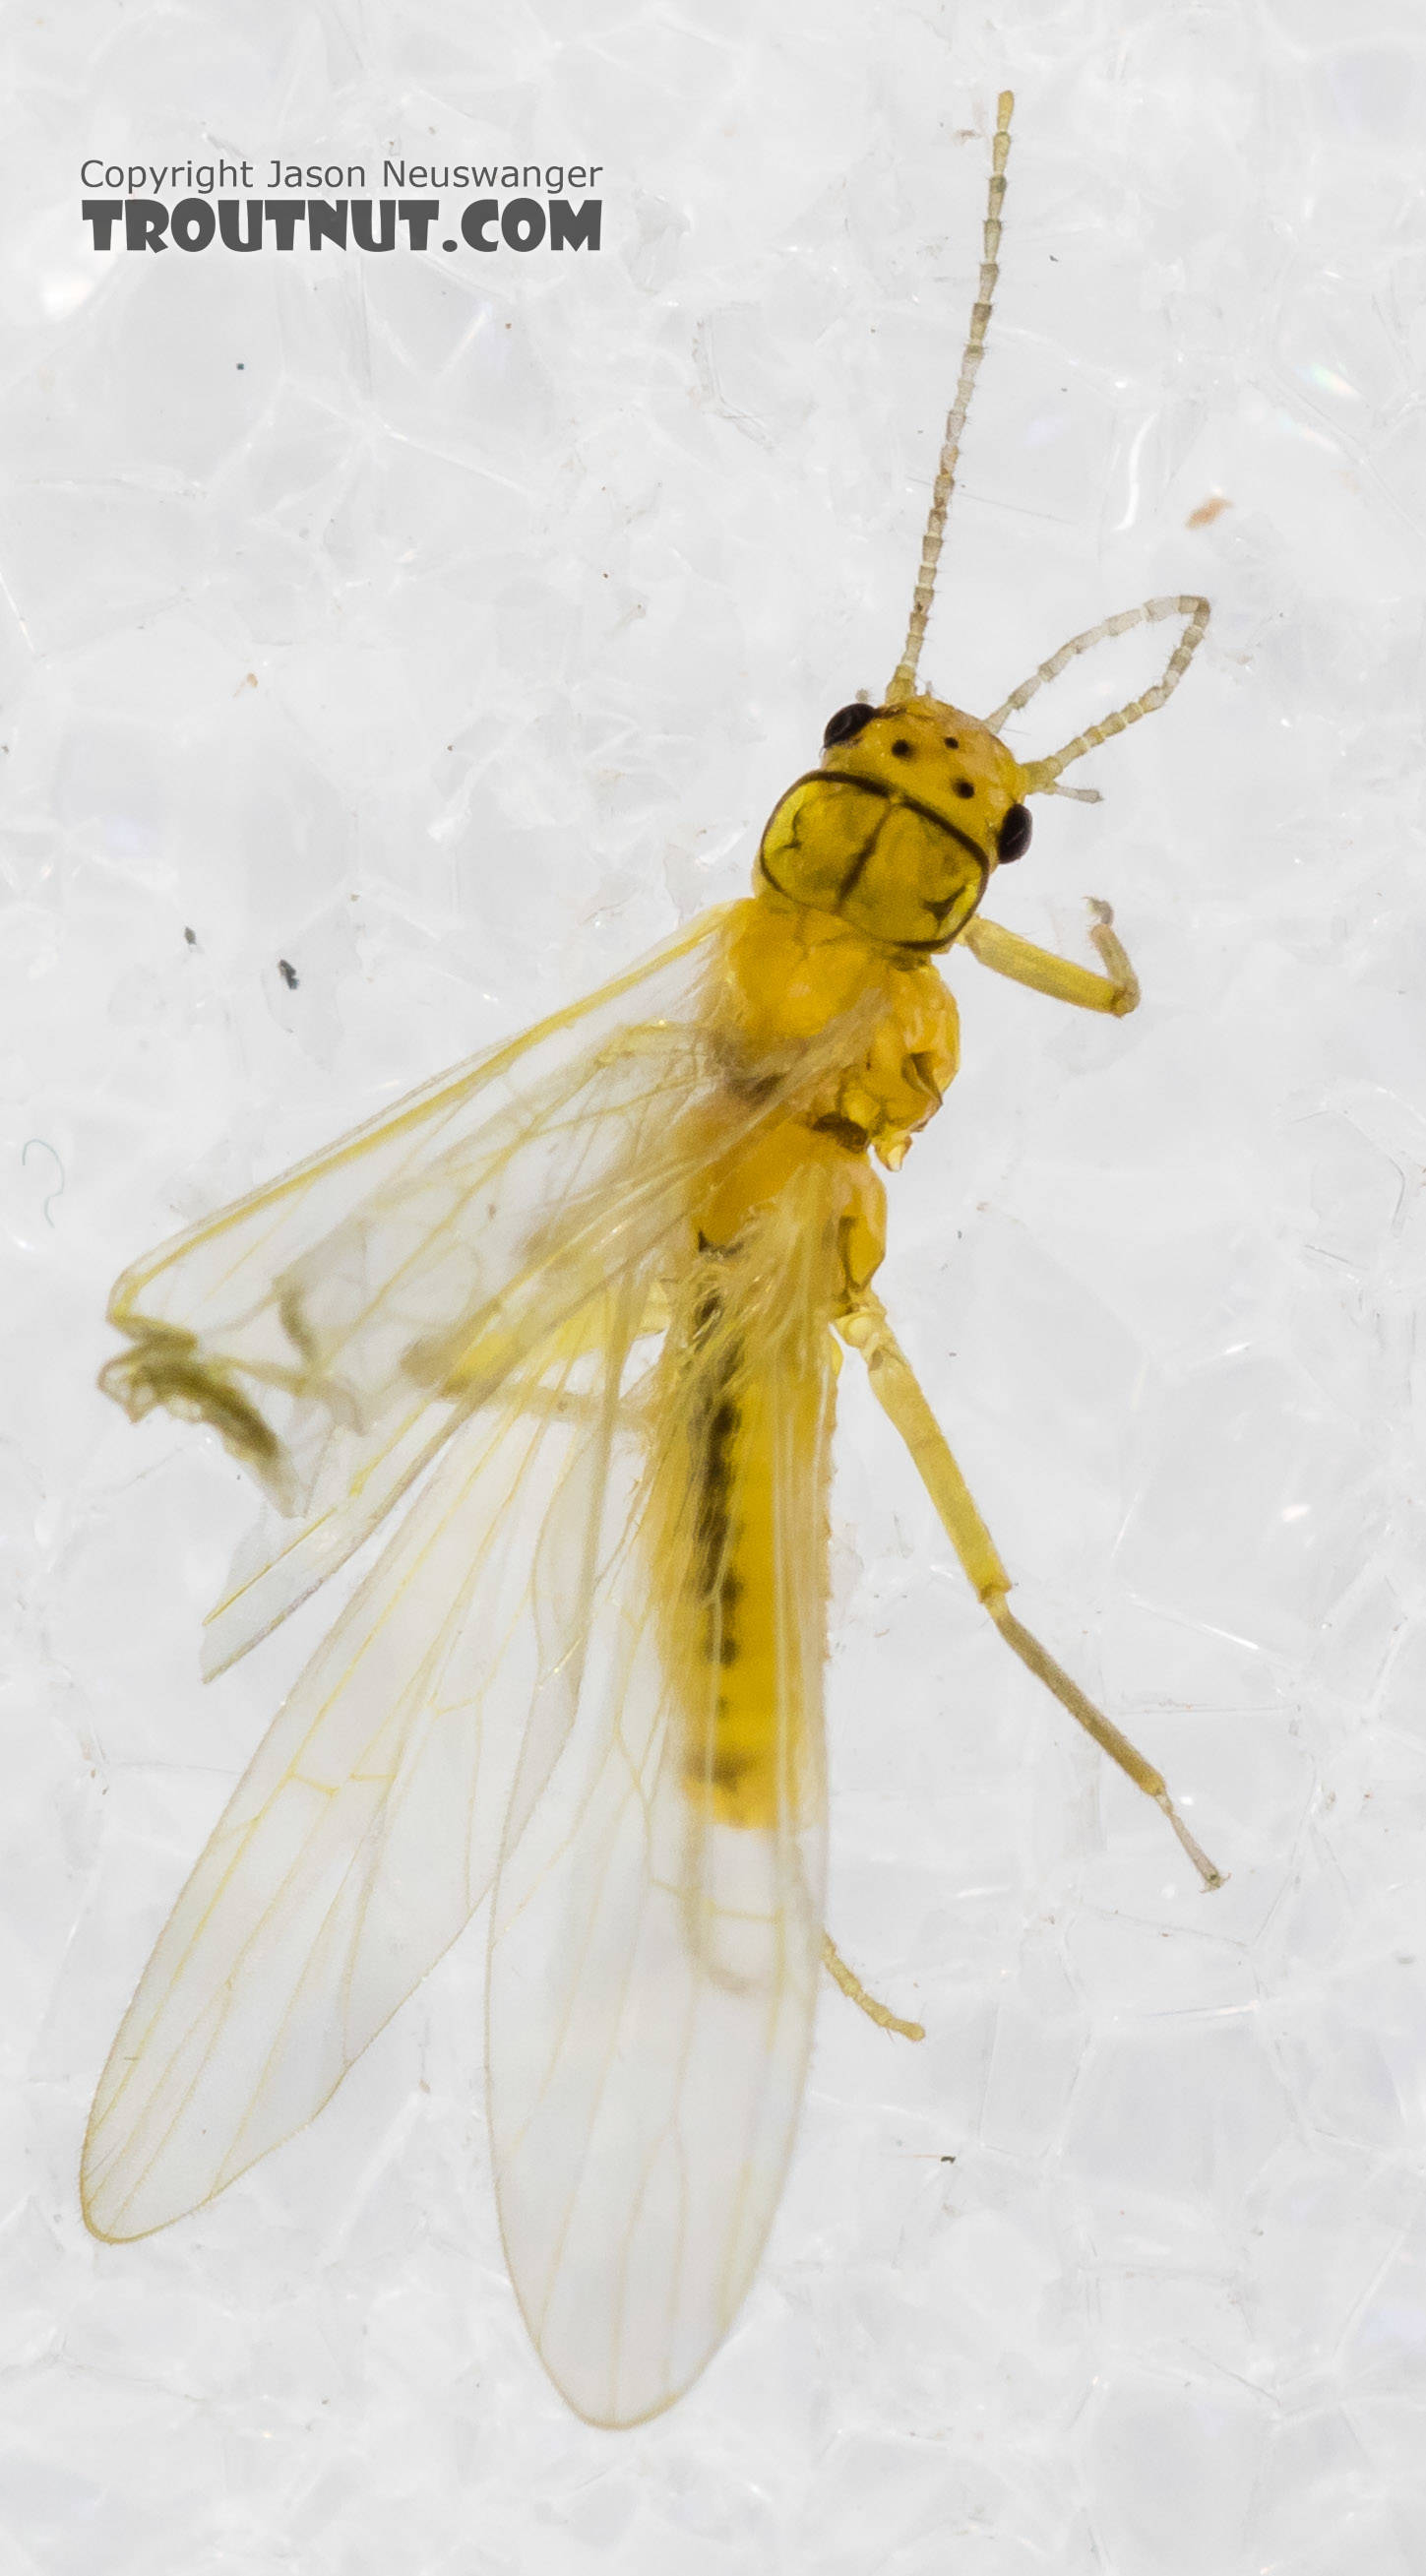 Chloroperlidae (Sallflies) Stonefly Adult from Mystery Creek #227 in Montana